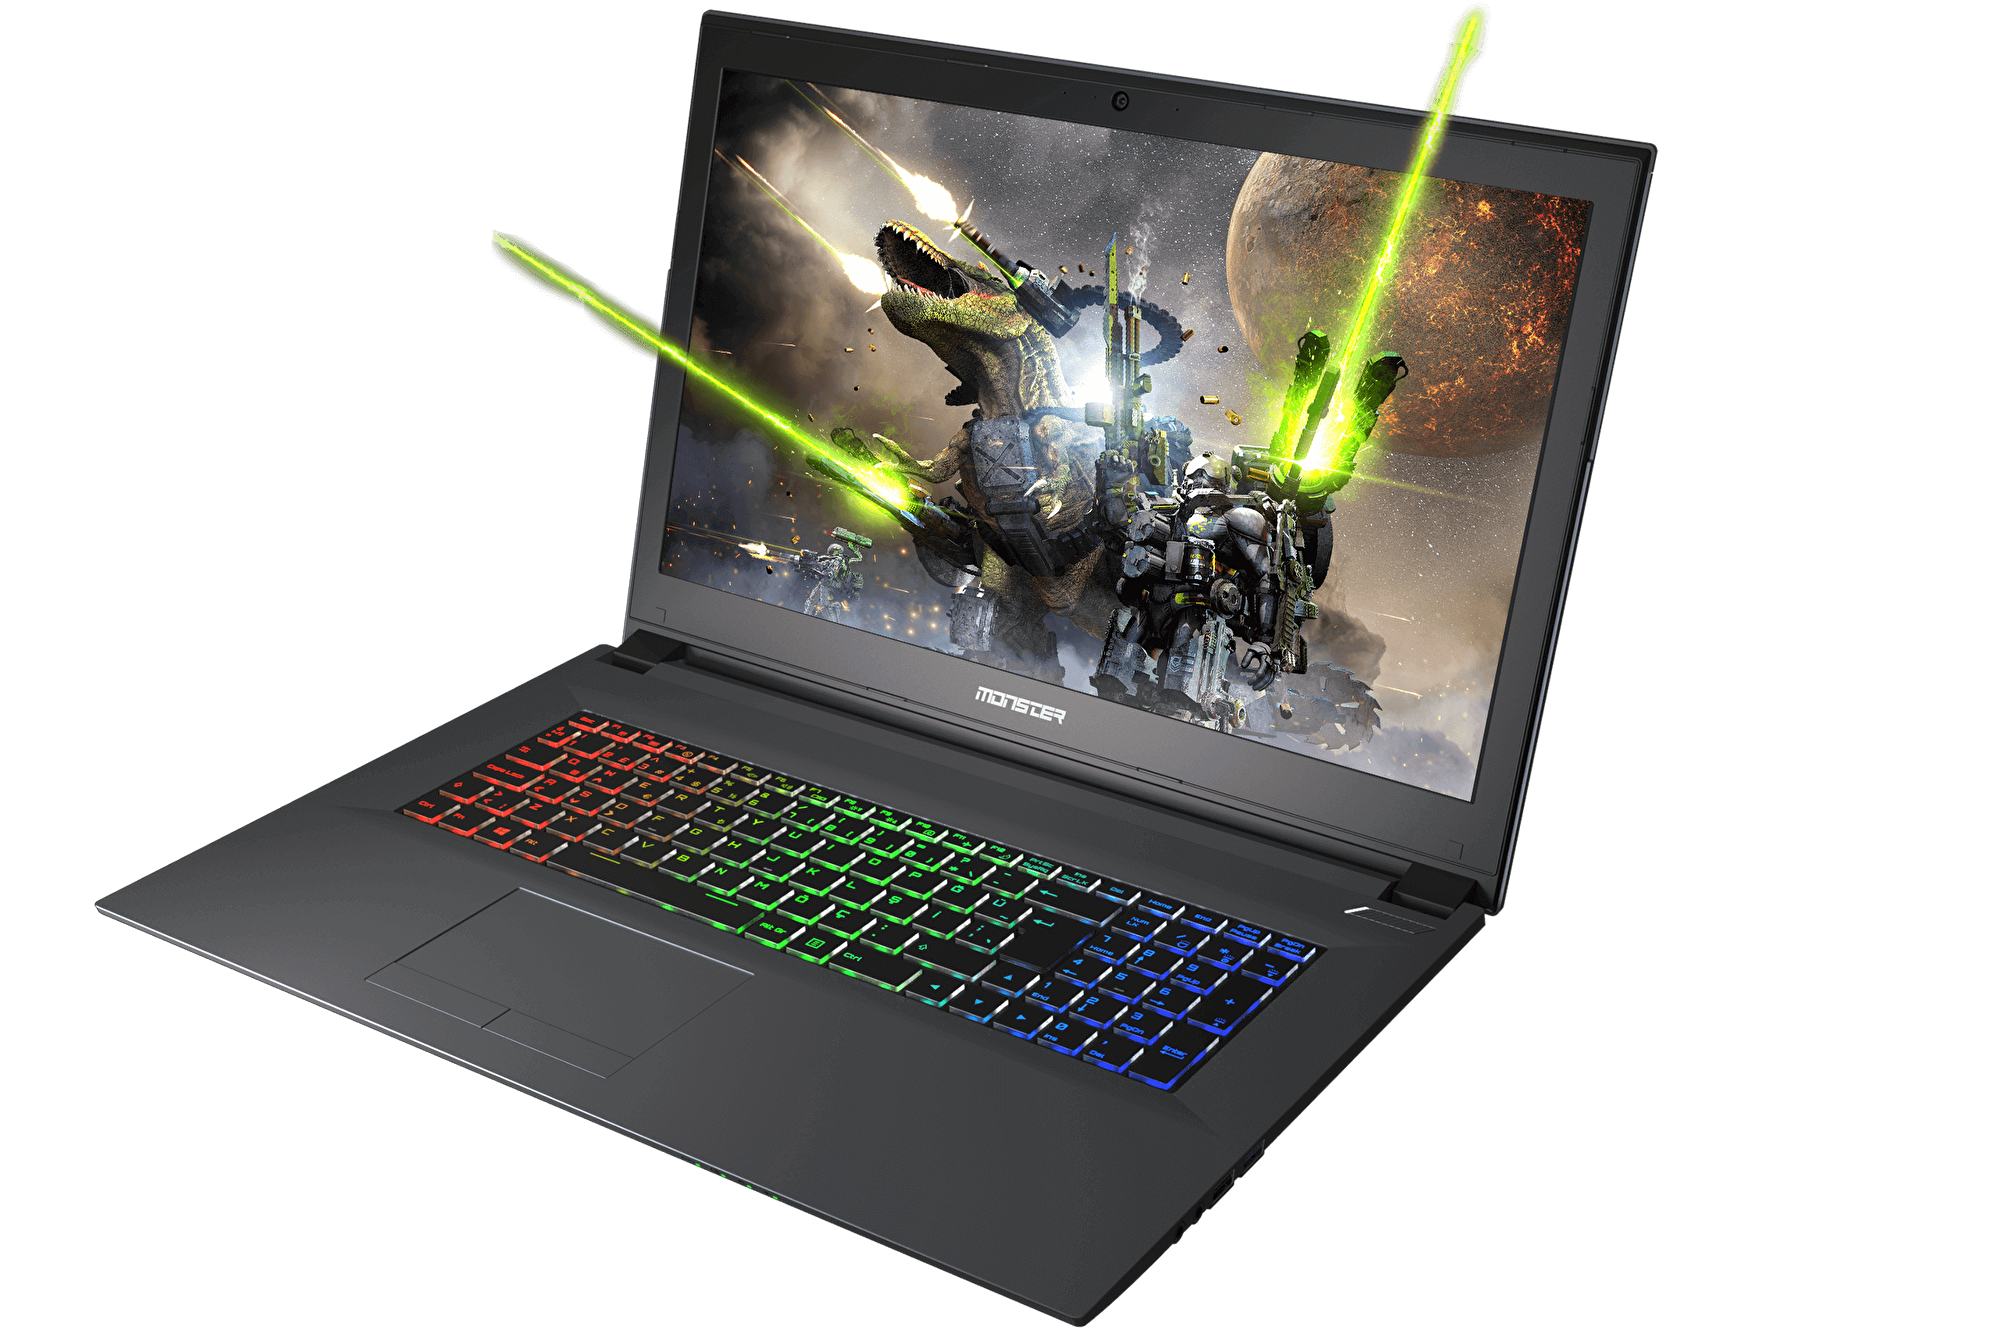 Abra A7 V7.1 17.3" Gaming Laptop 17604